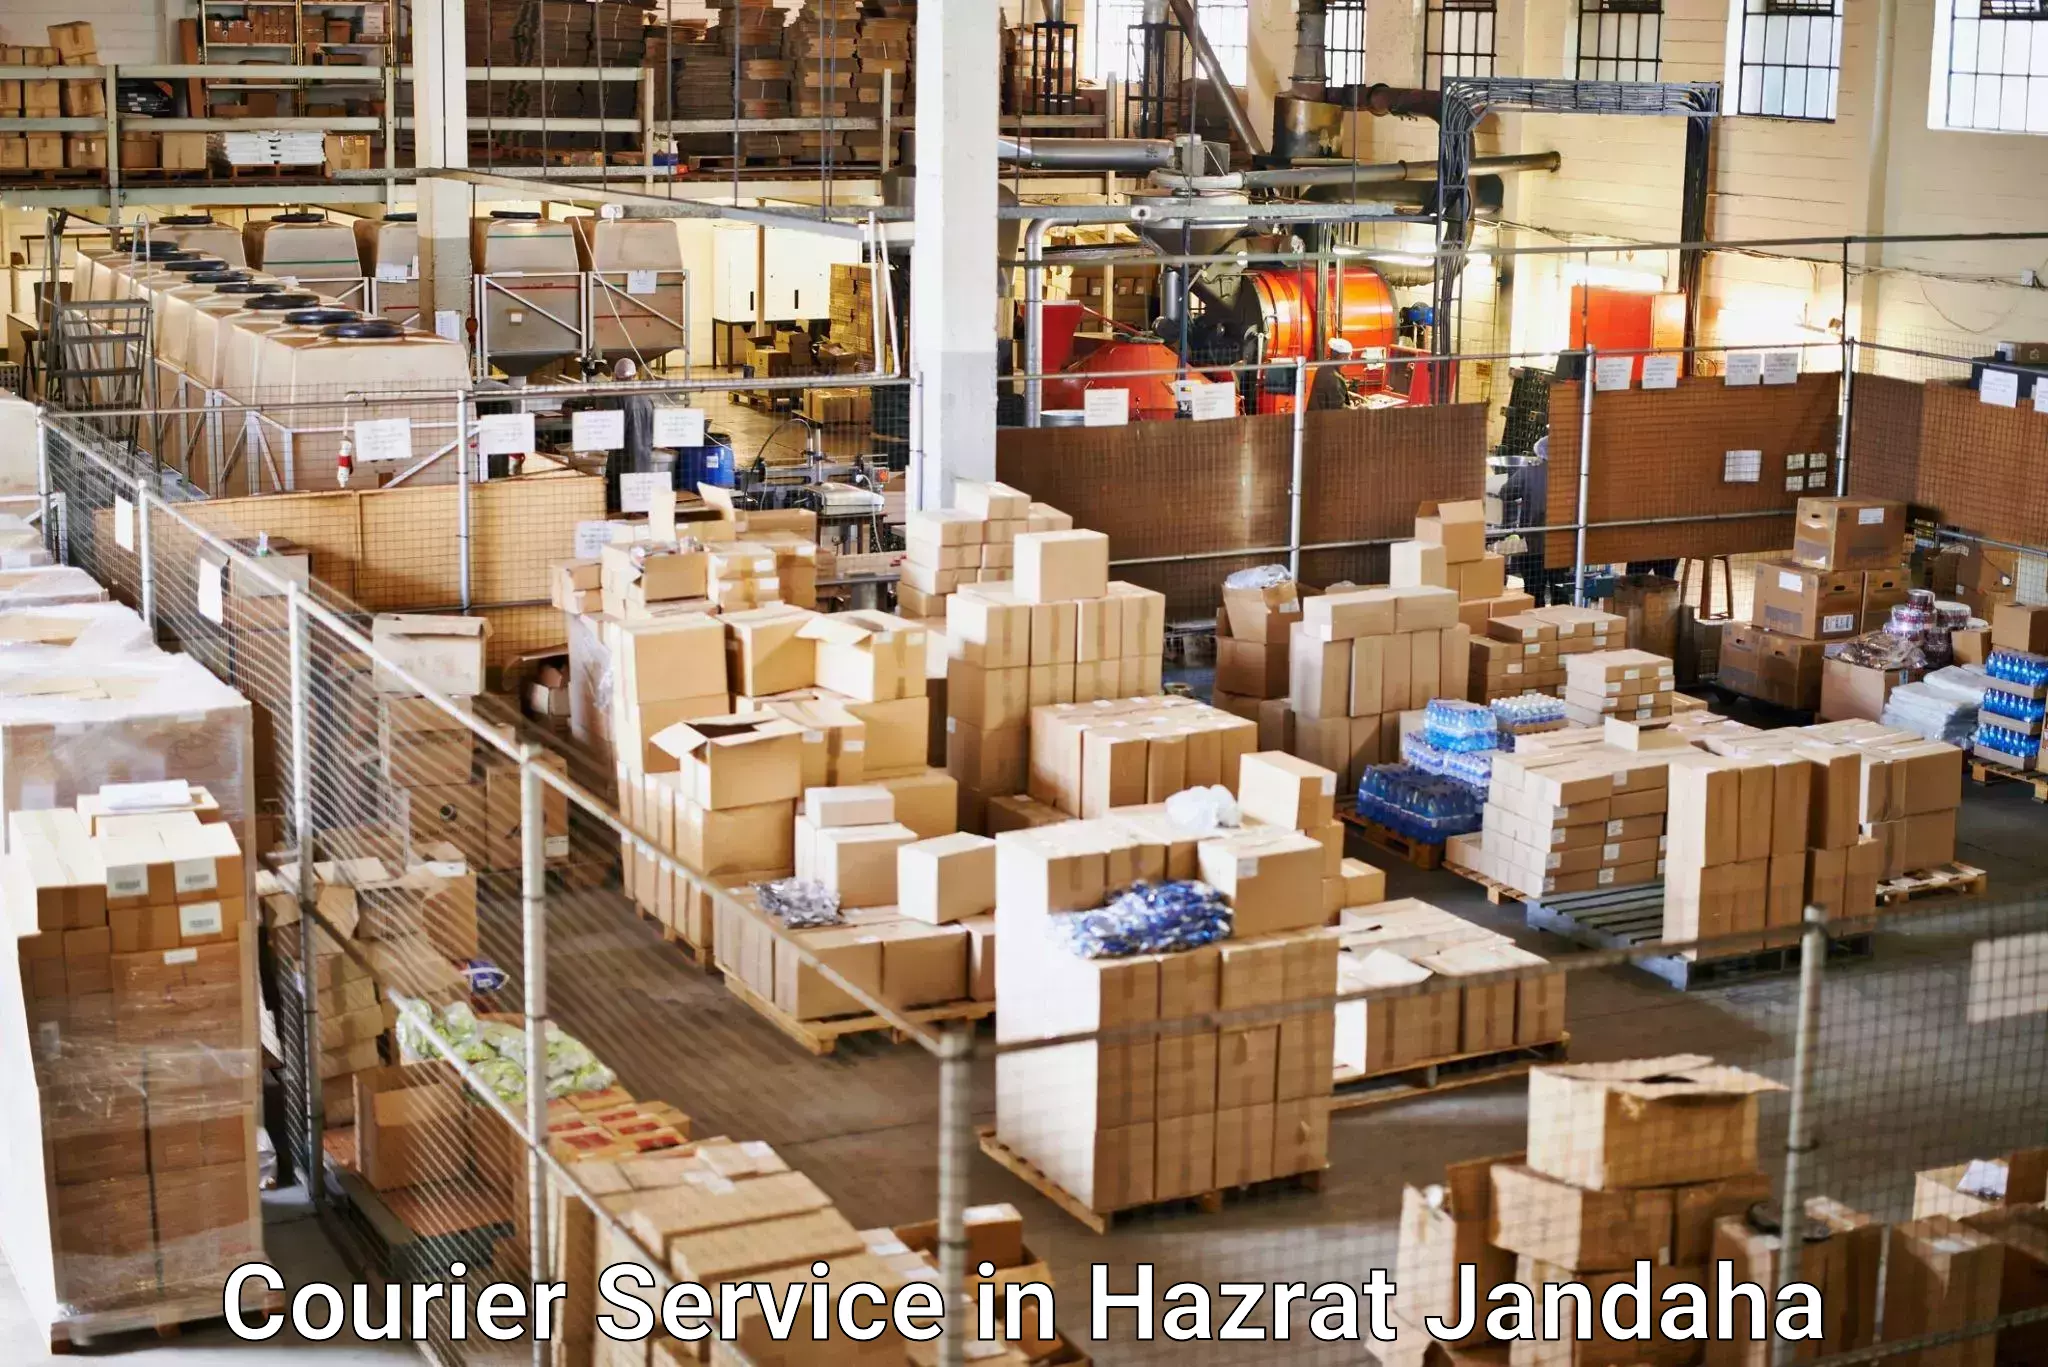 Reliable shipping partners in Hazrat Jandaha